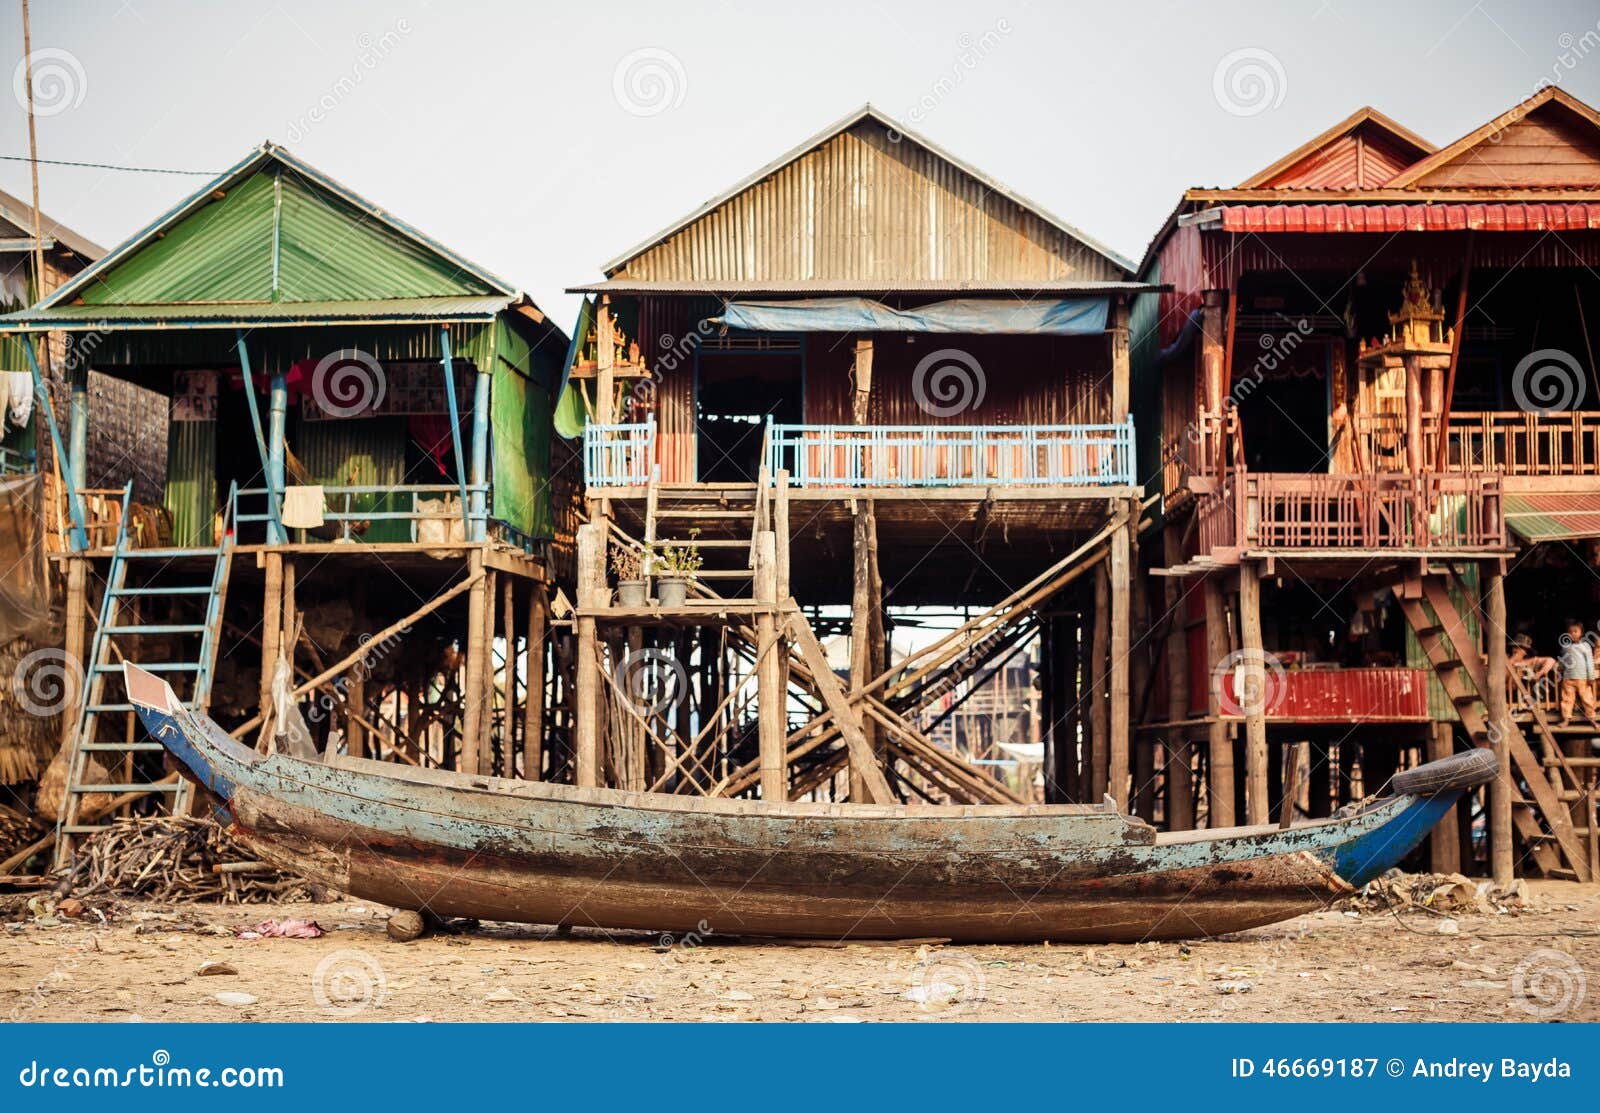 Kompog Xx Video - Kompong Phlok Floating Village Stock Image - Image of building, poor:  46669187